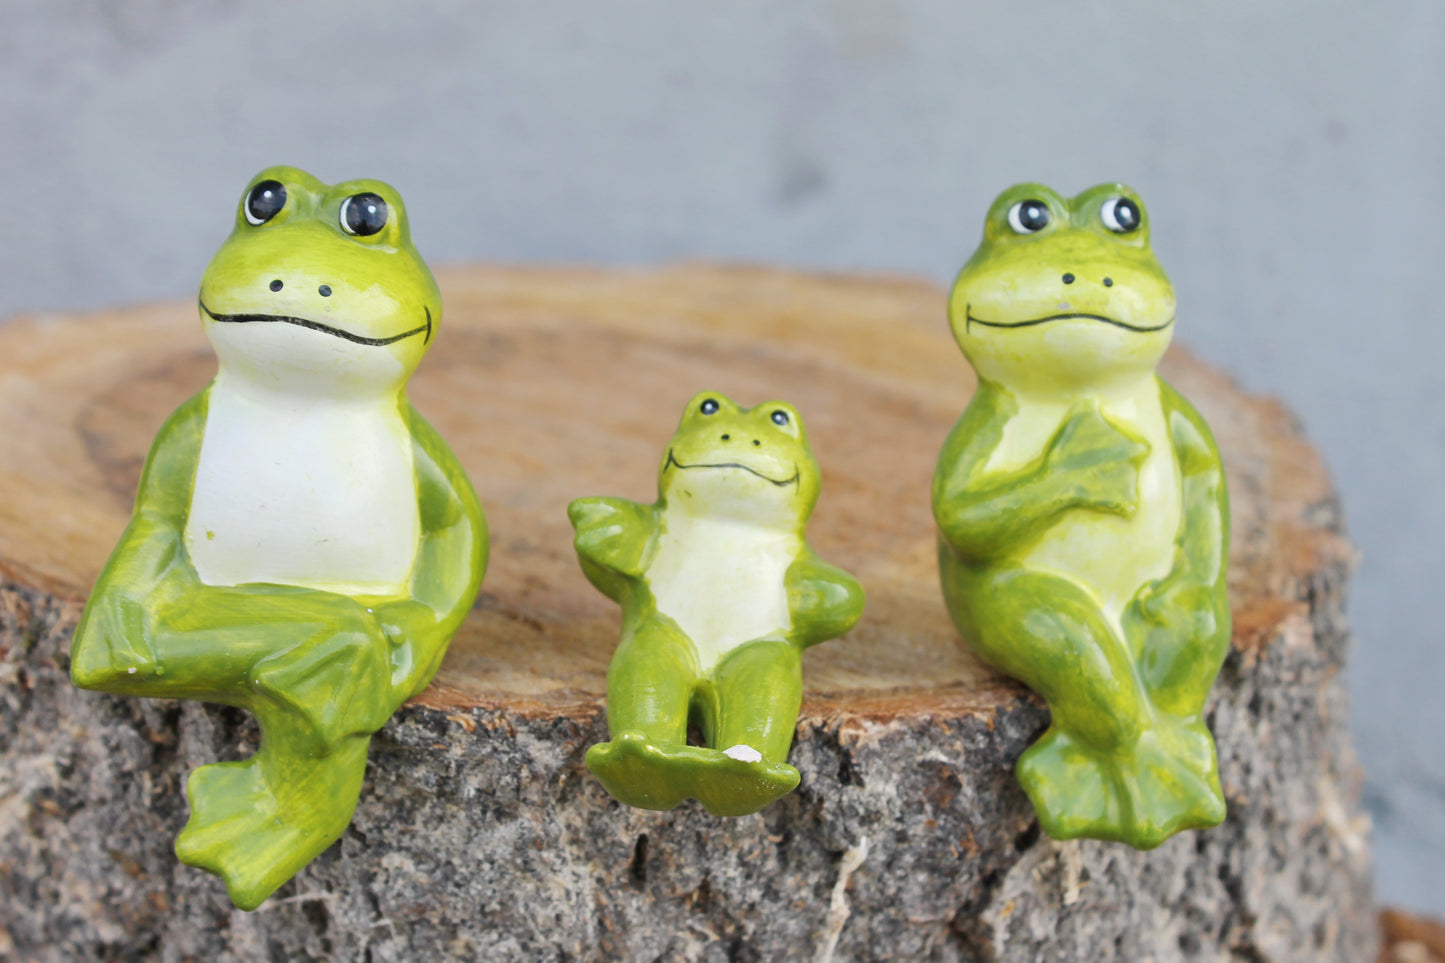 Vintage porcelain set of six sitting Frogs - Germany small figurines - vintage decor - Germany vintage - 1990s